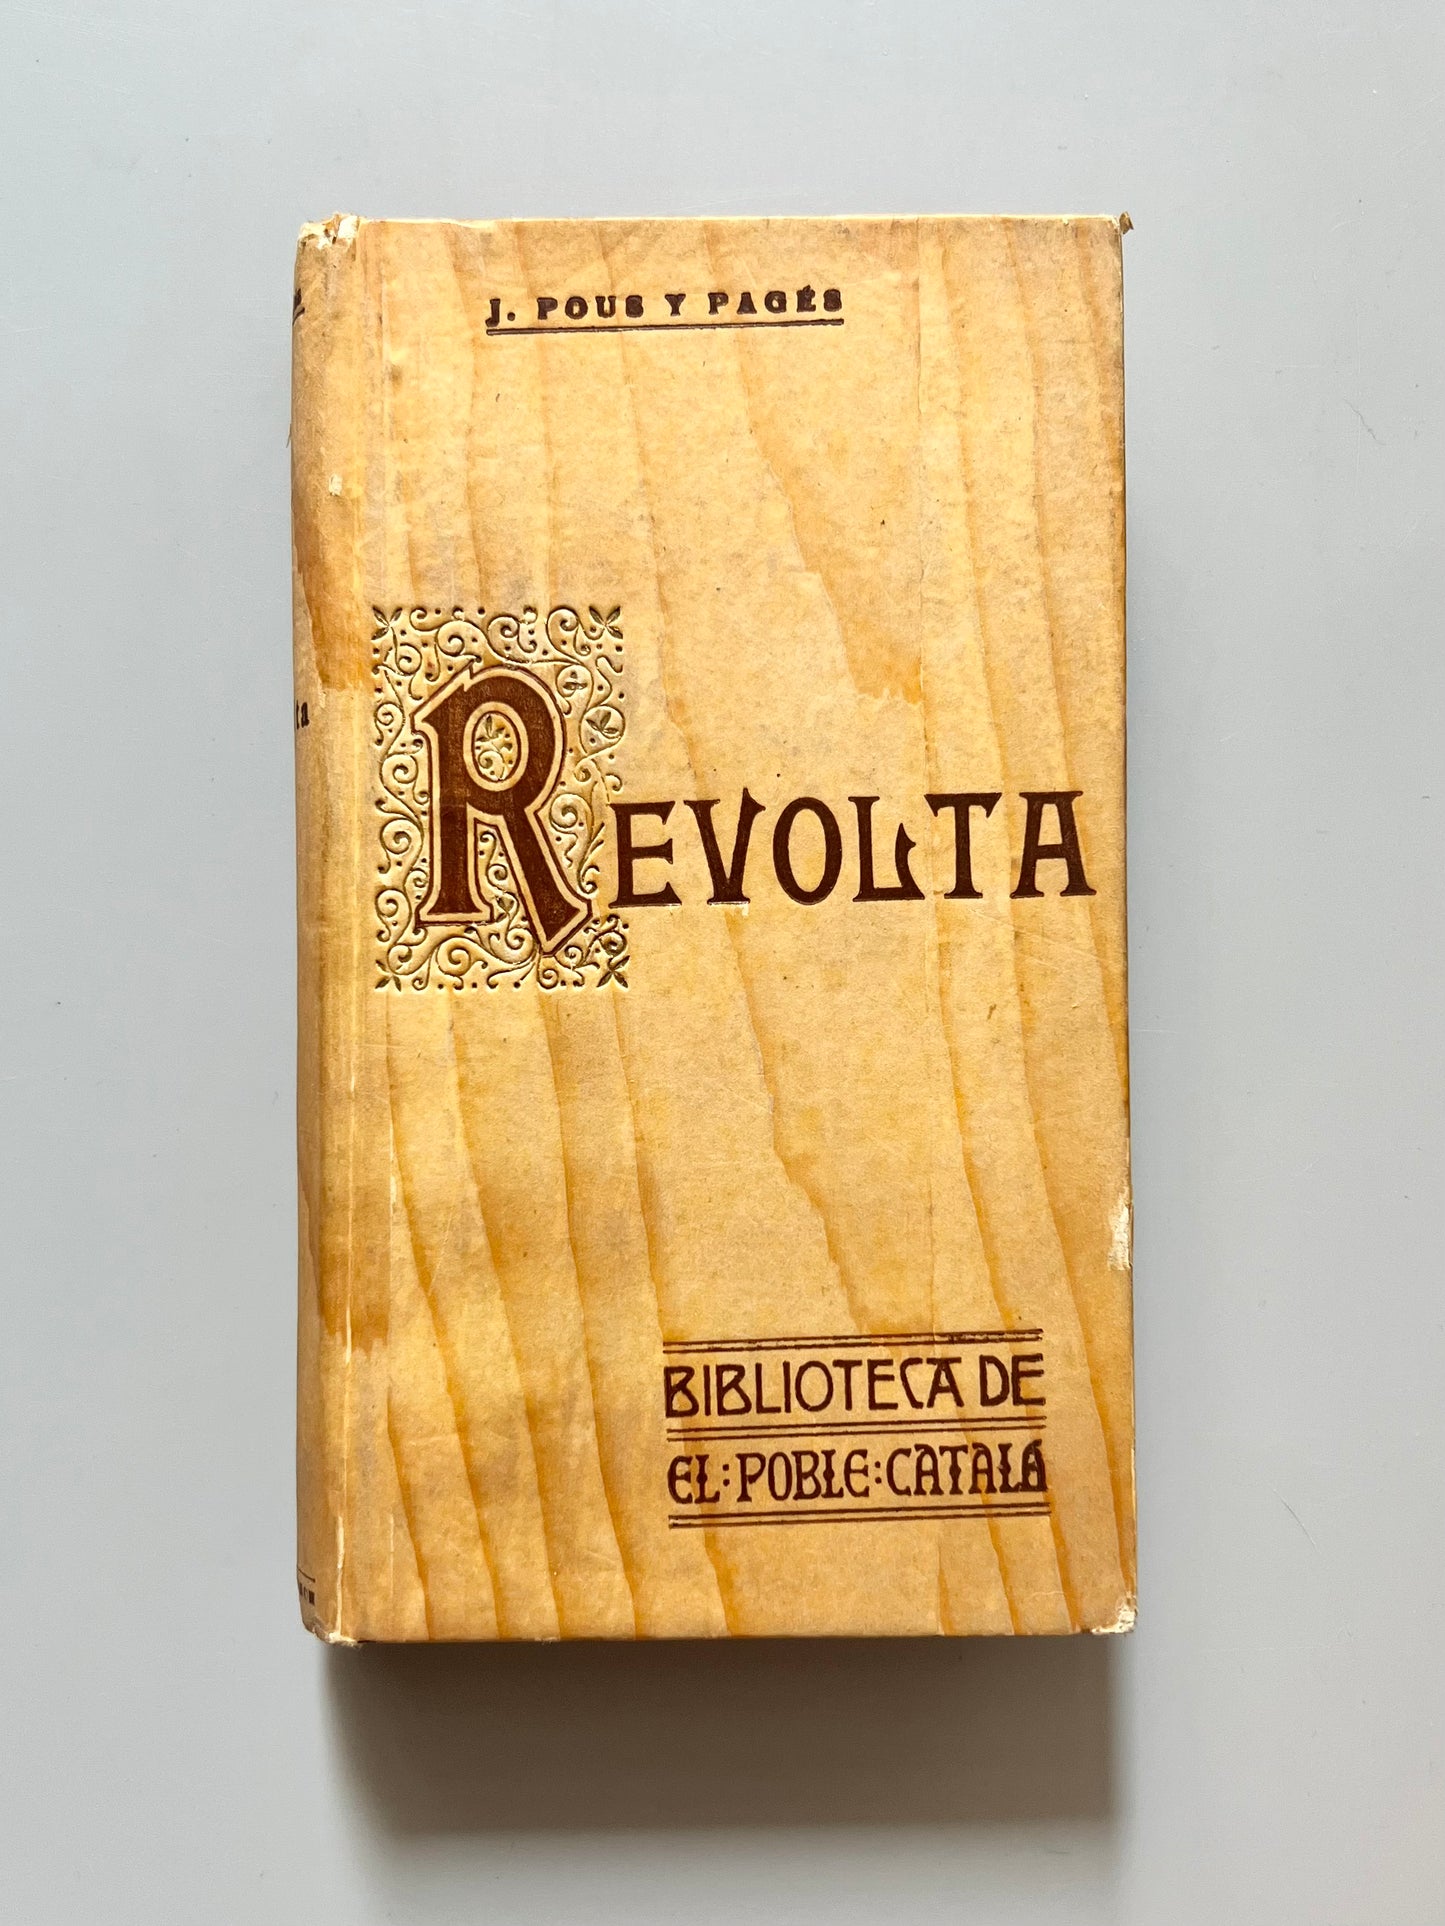 Revolta, J. Pous y Pagés - Biblioteca d'El Poble Catalá, 1906